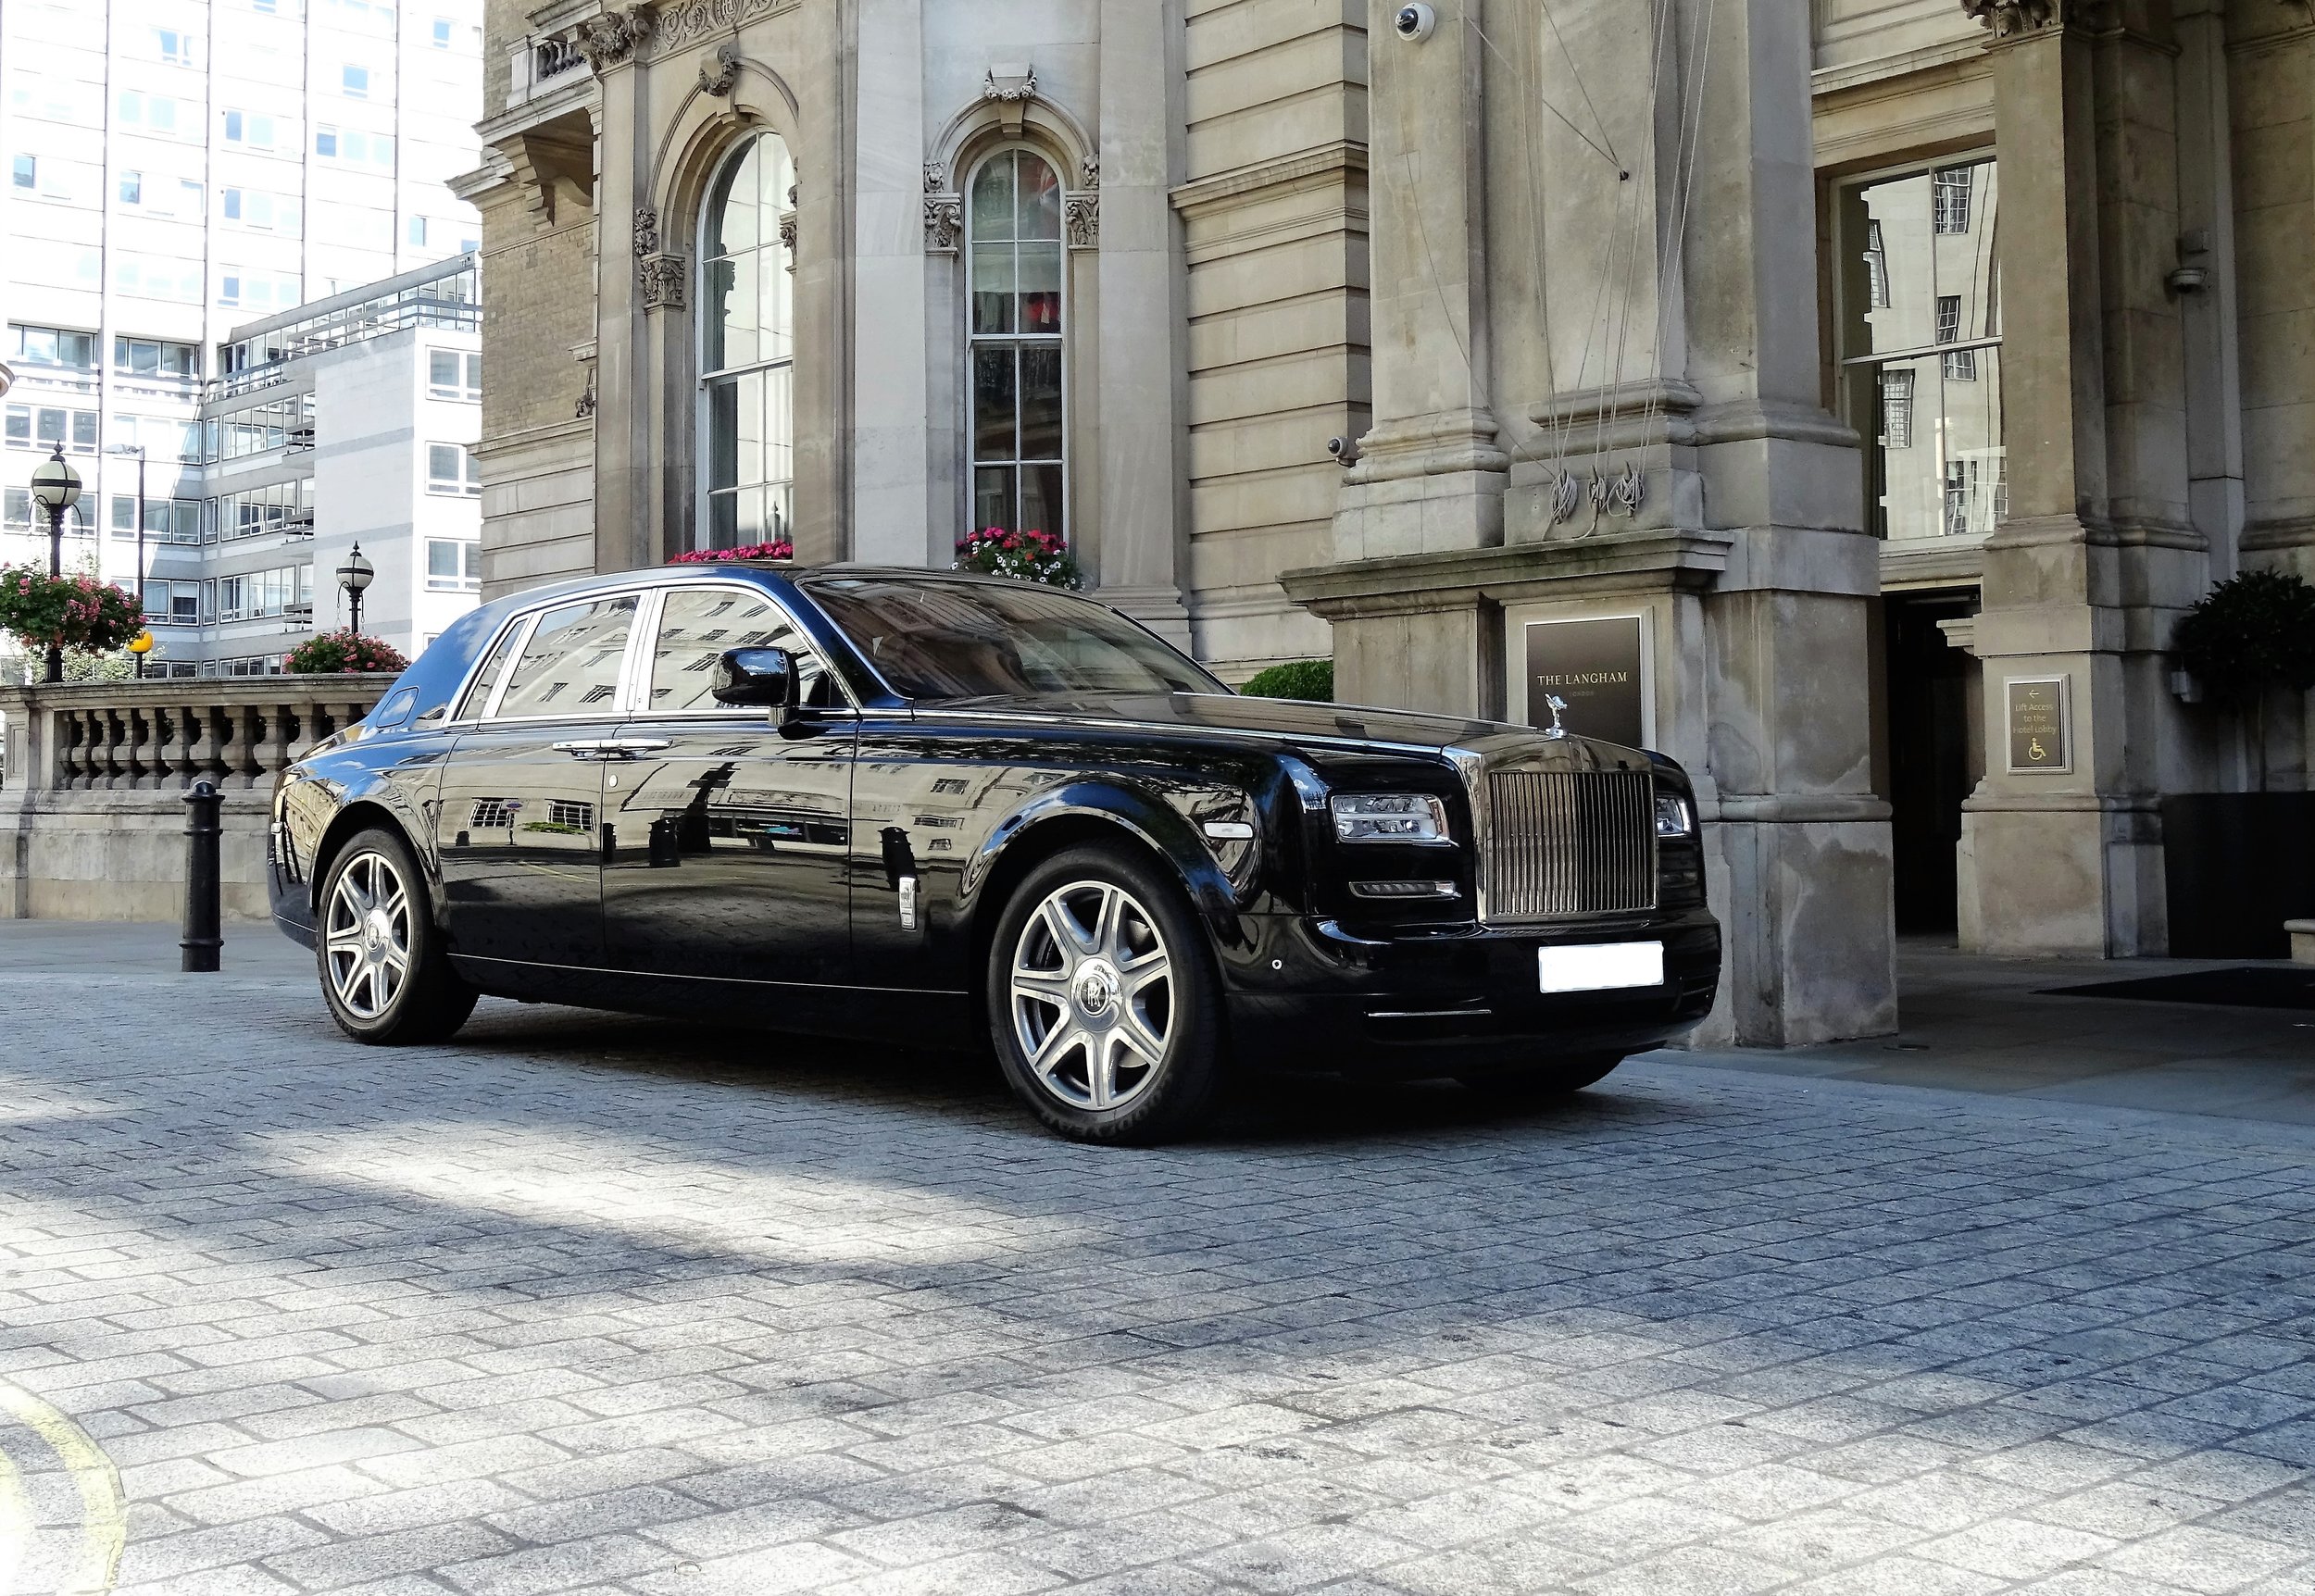 Rolls-Royce Phantom - Chauffeur-driven car hire - Cobham, Surrey